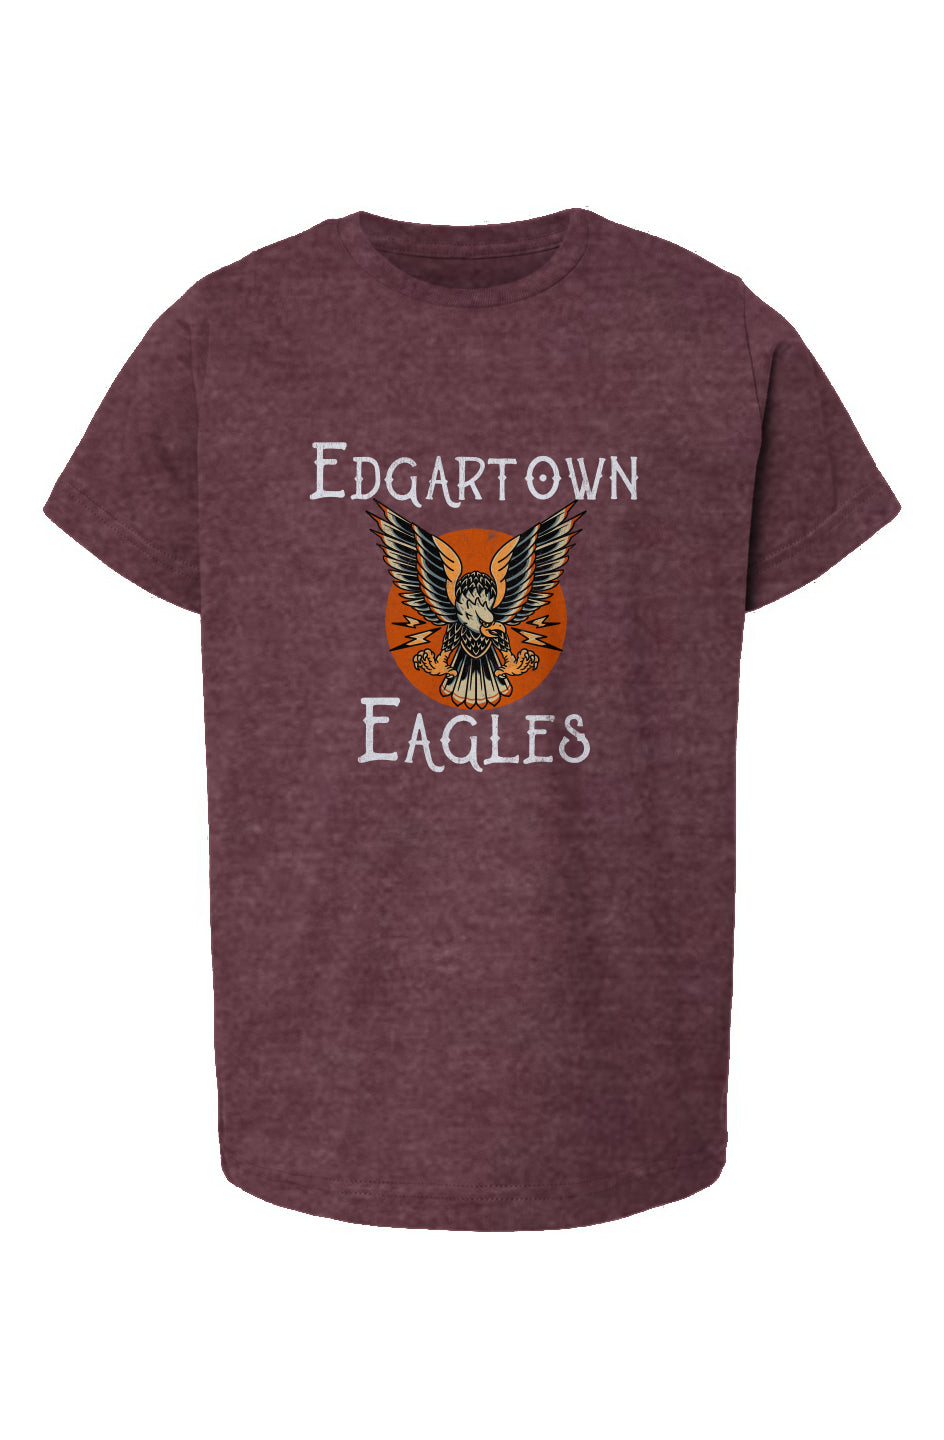 Edgartown Eagles Youth Tee